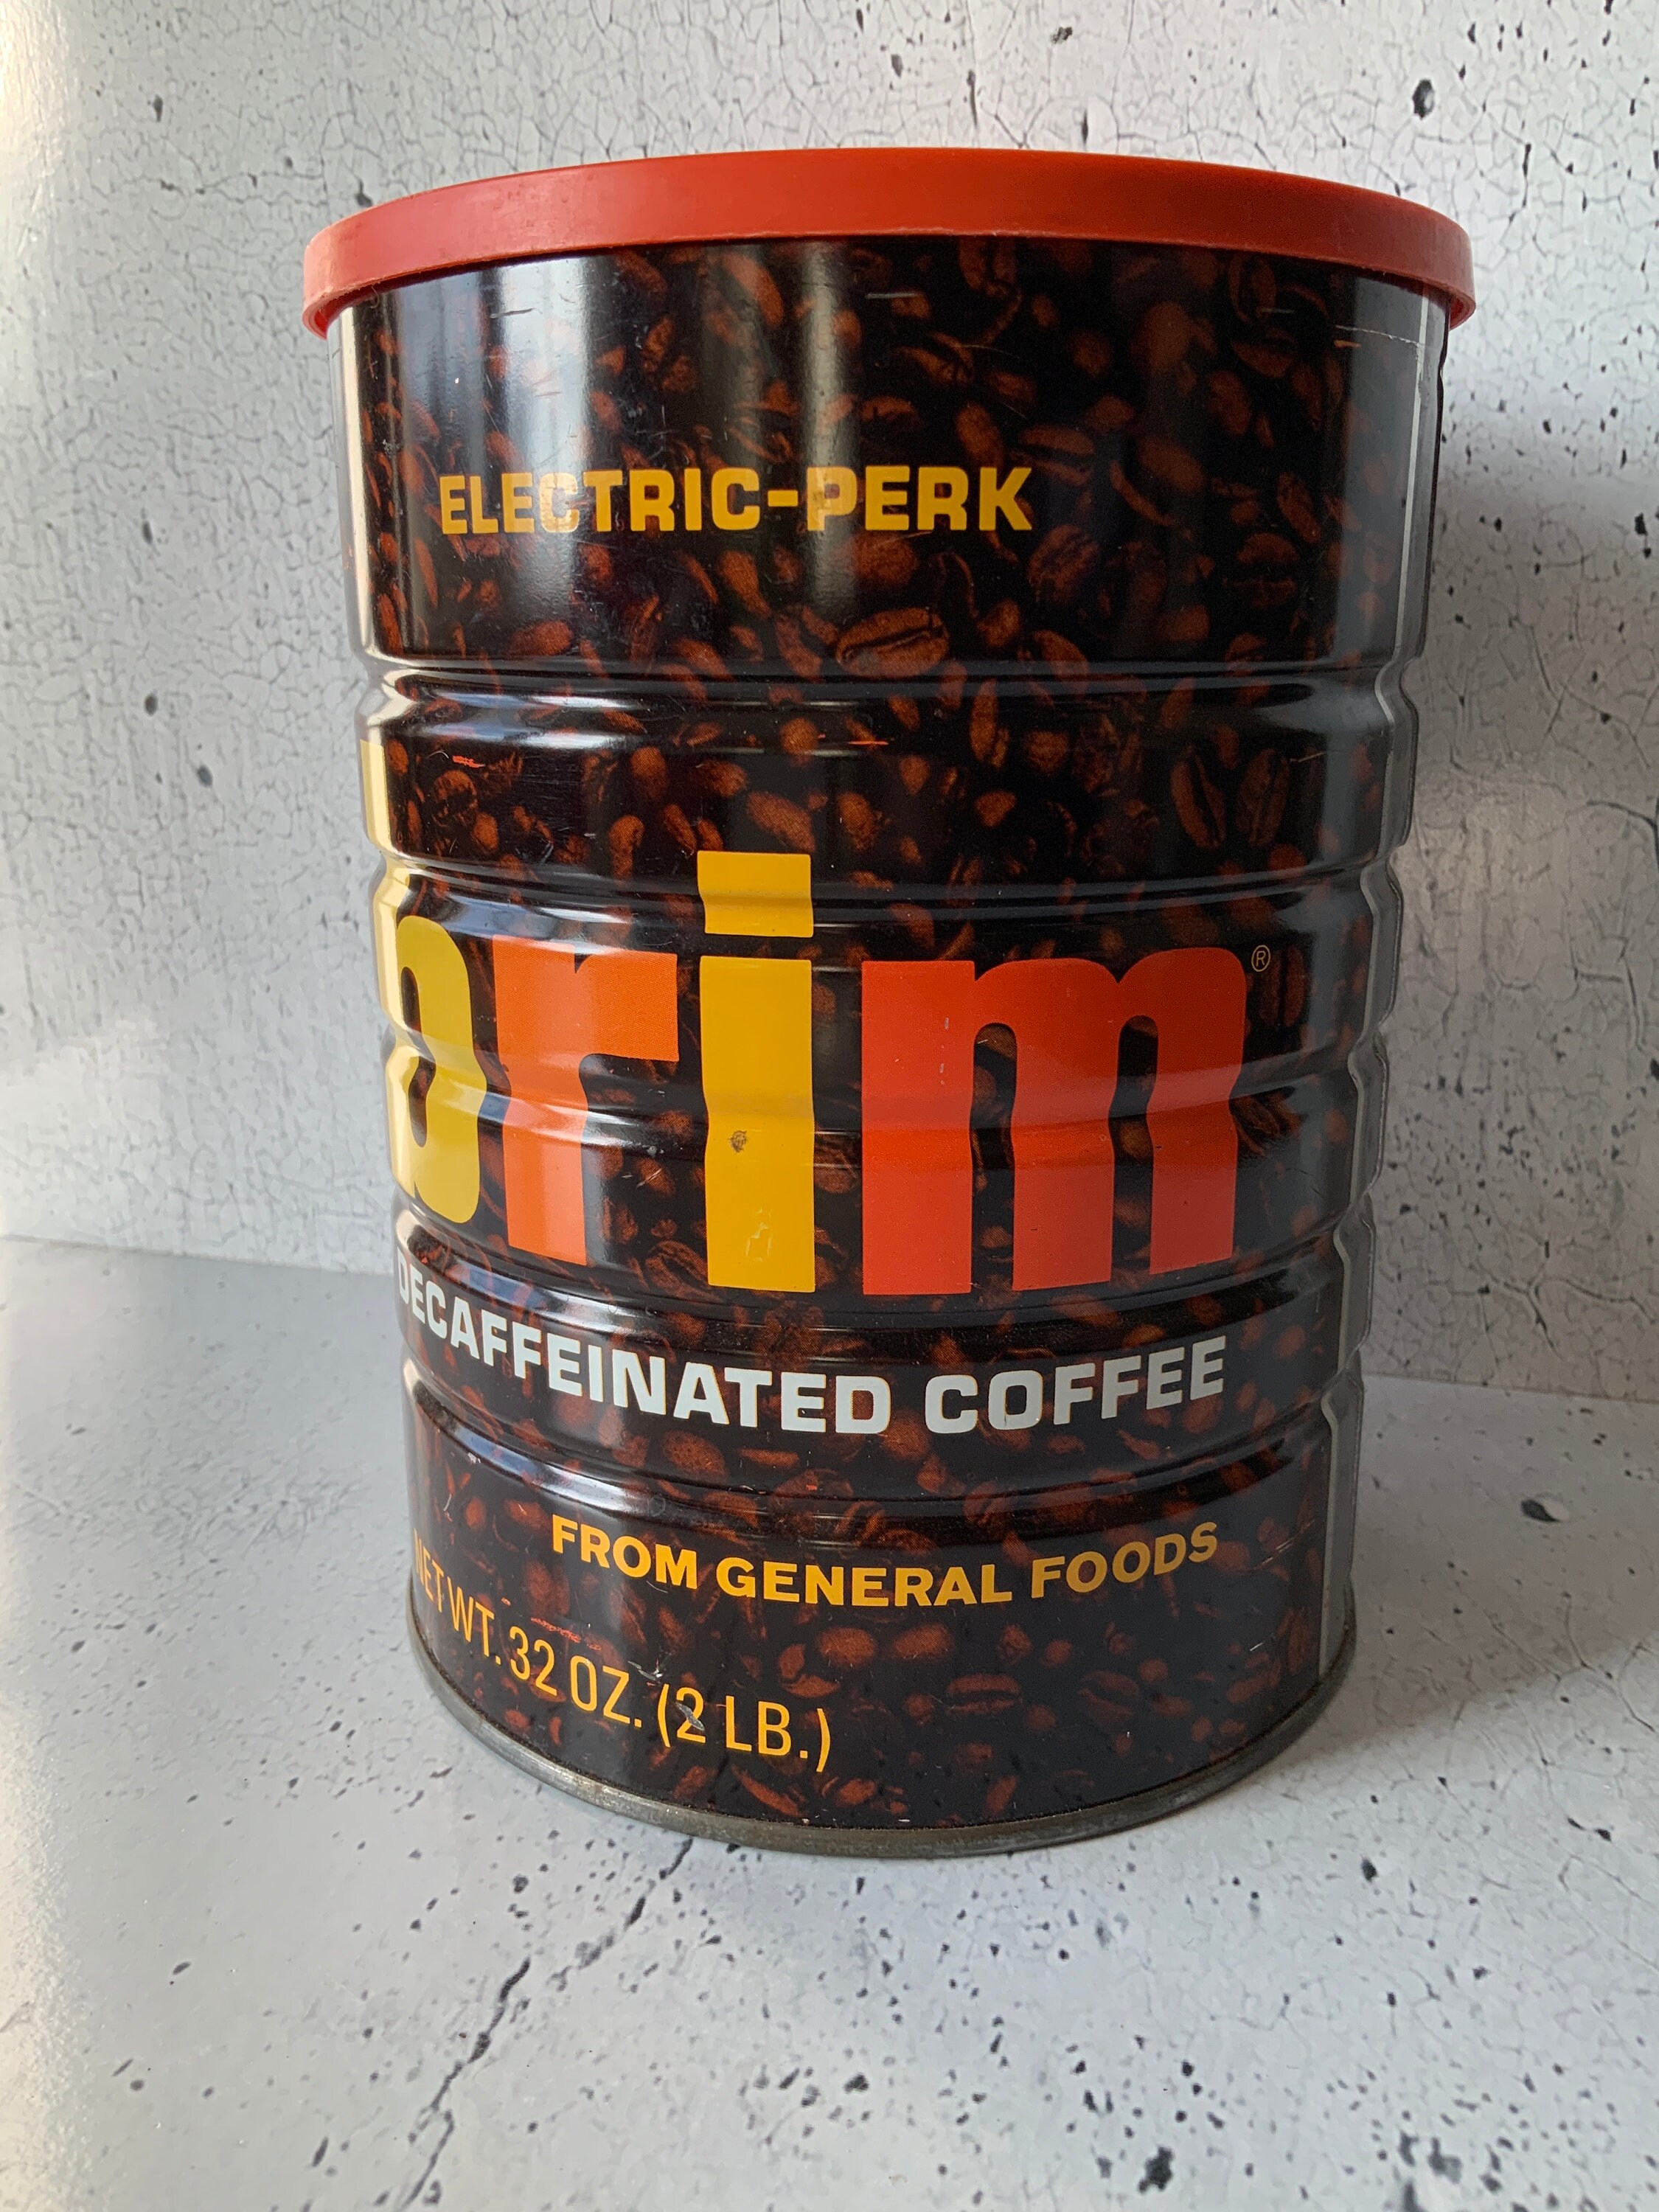 Brim Coffee